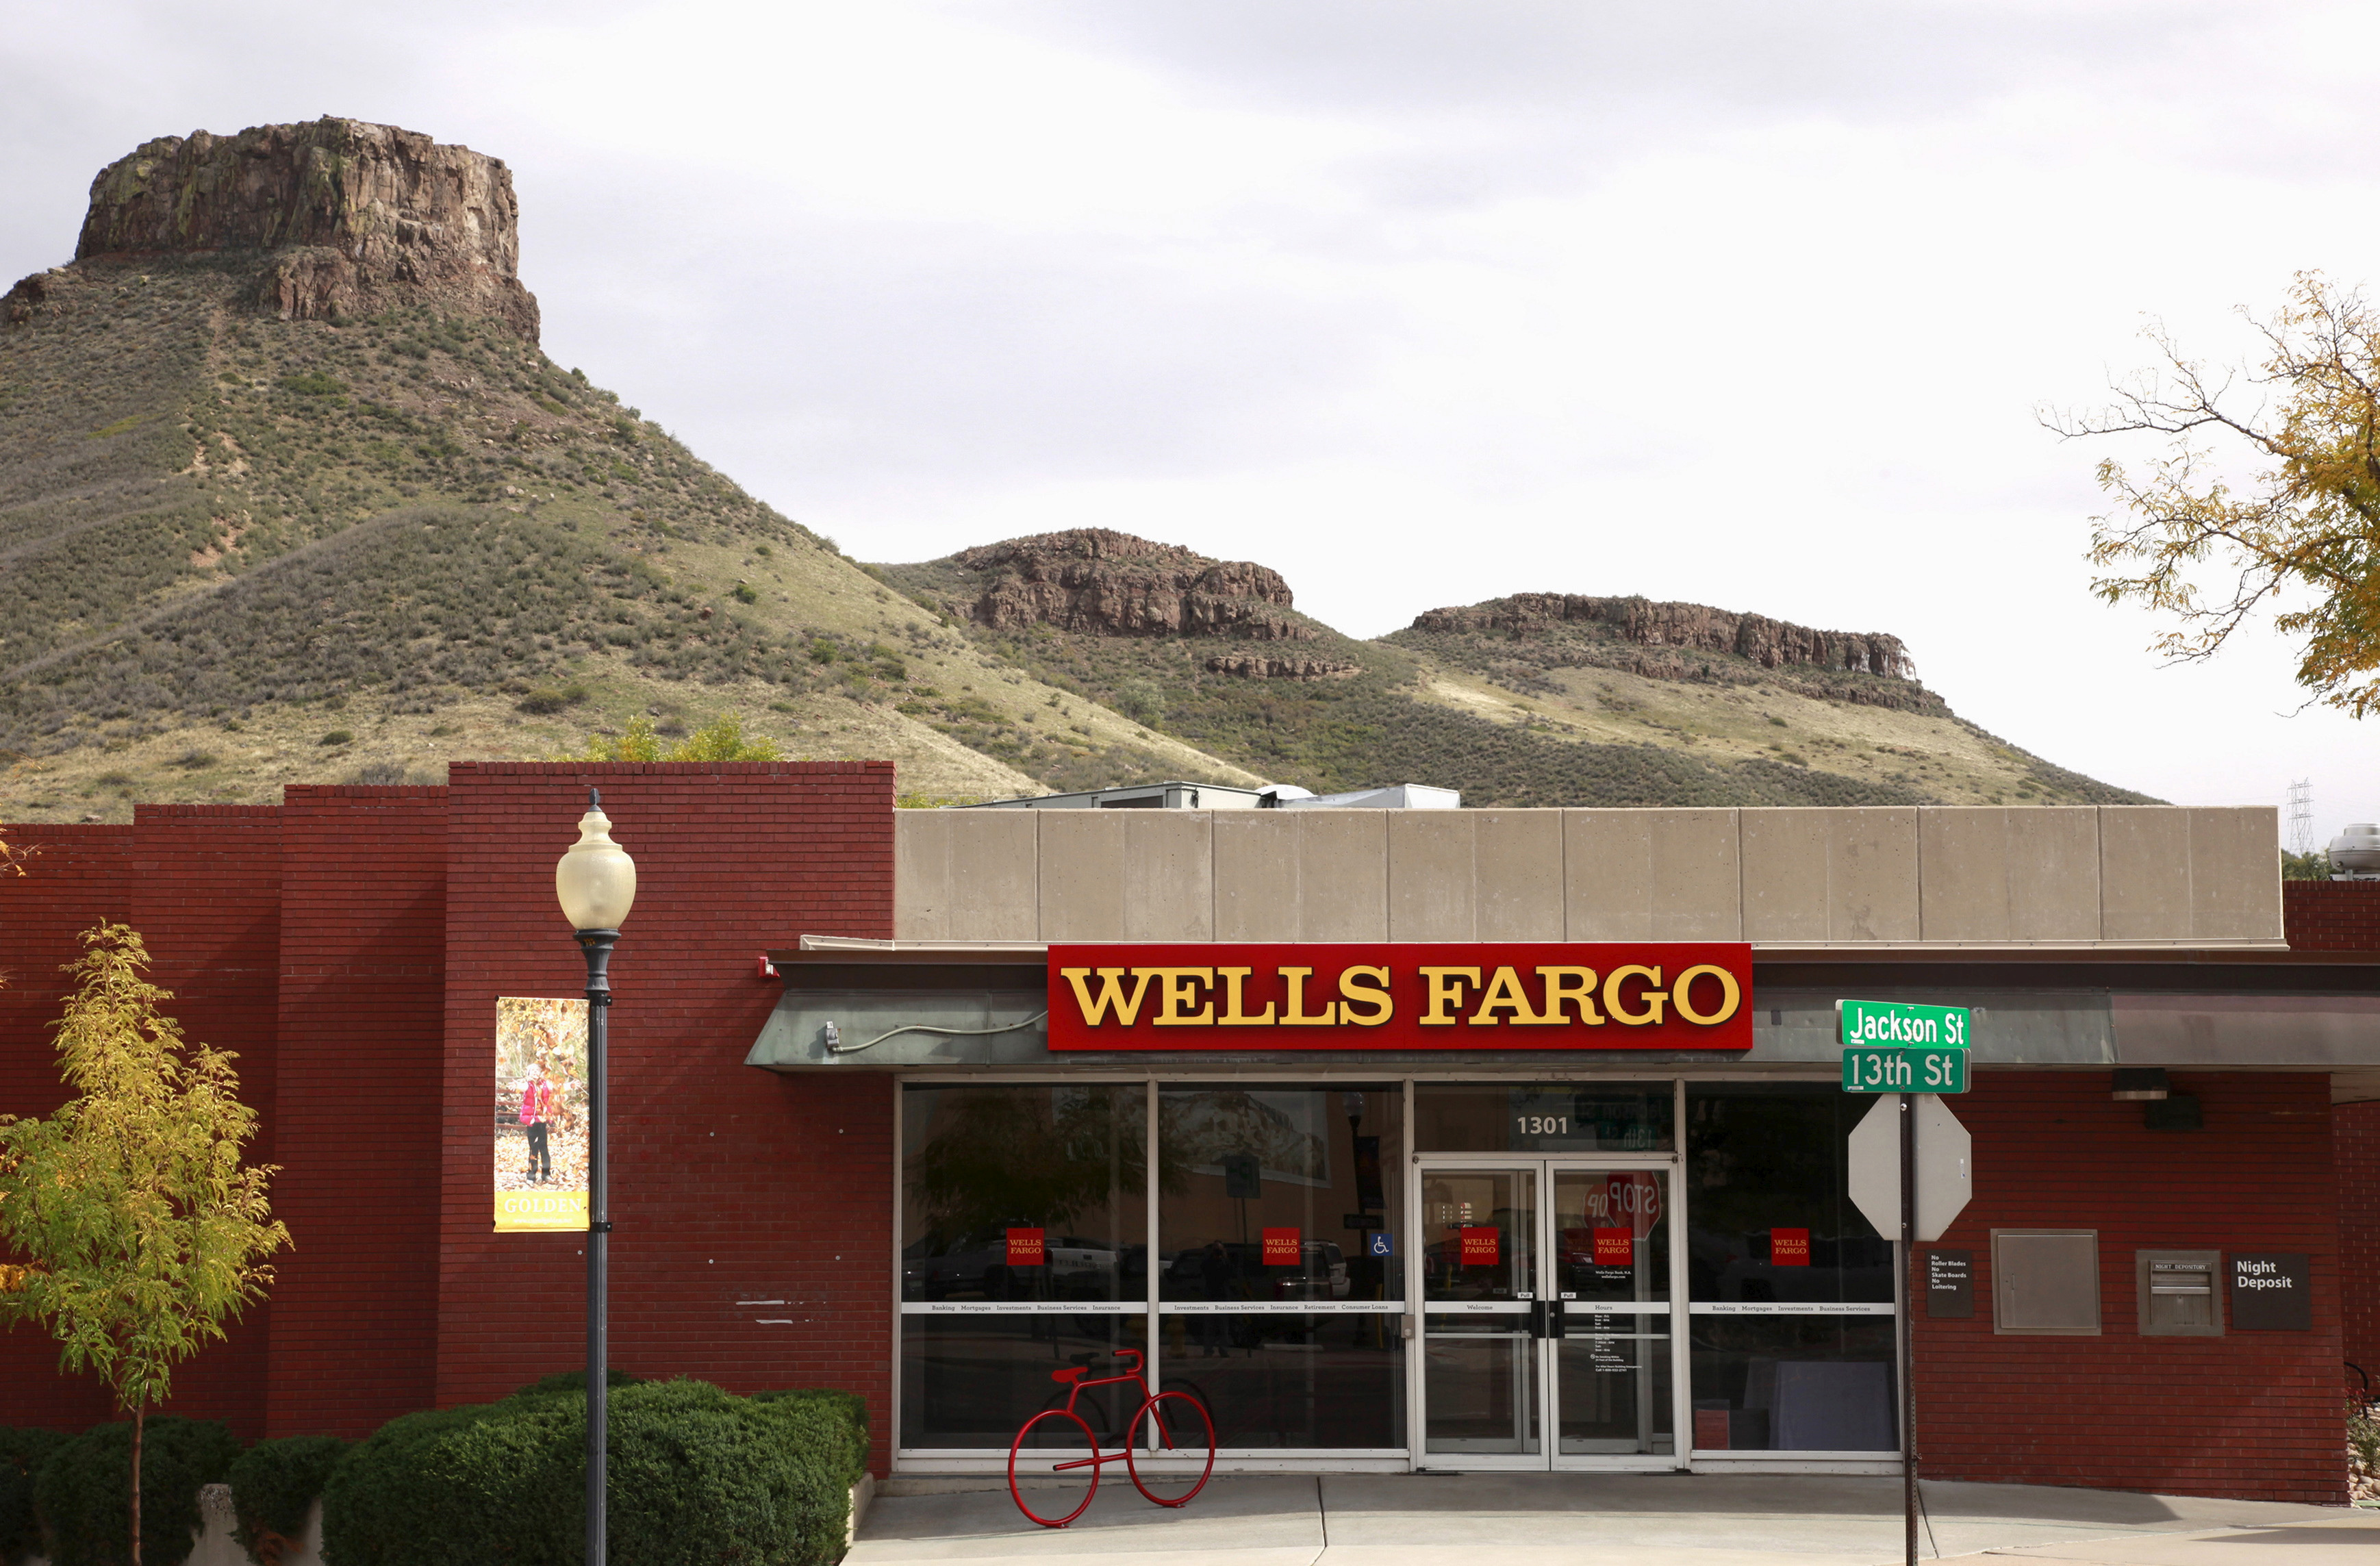 File photo of a Wells Fargo bank branch in Golden, Colorado